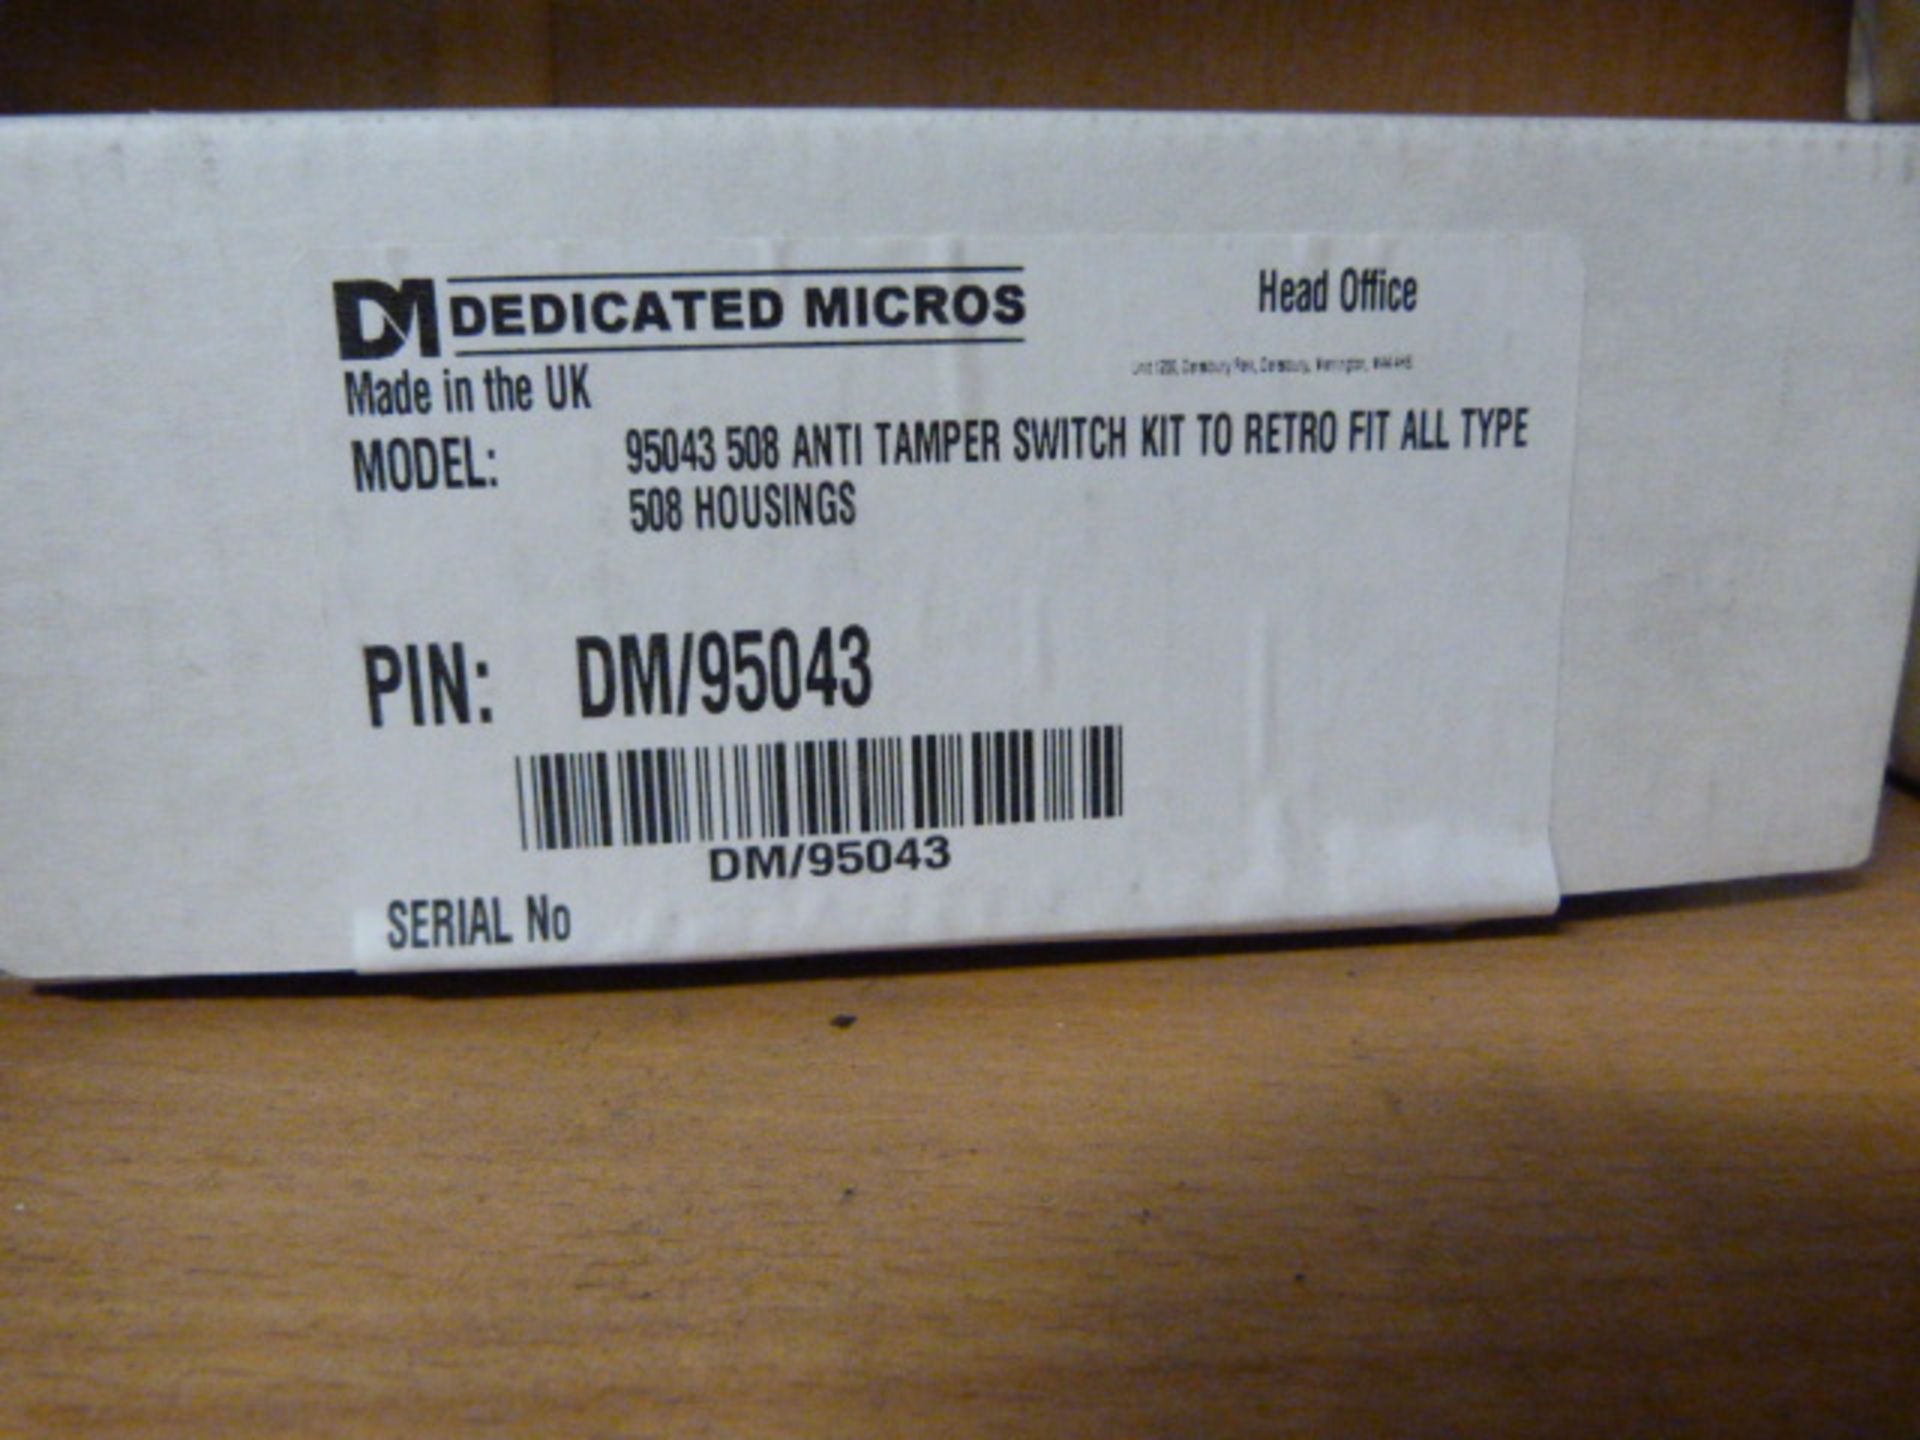 *Dedicated Micros Anti Tamper Switch Kit 95043508